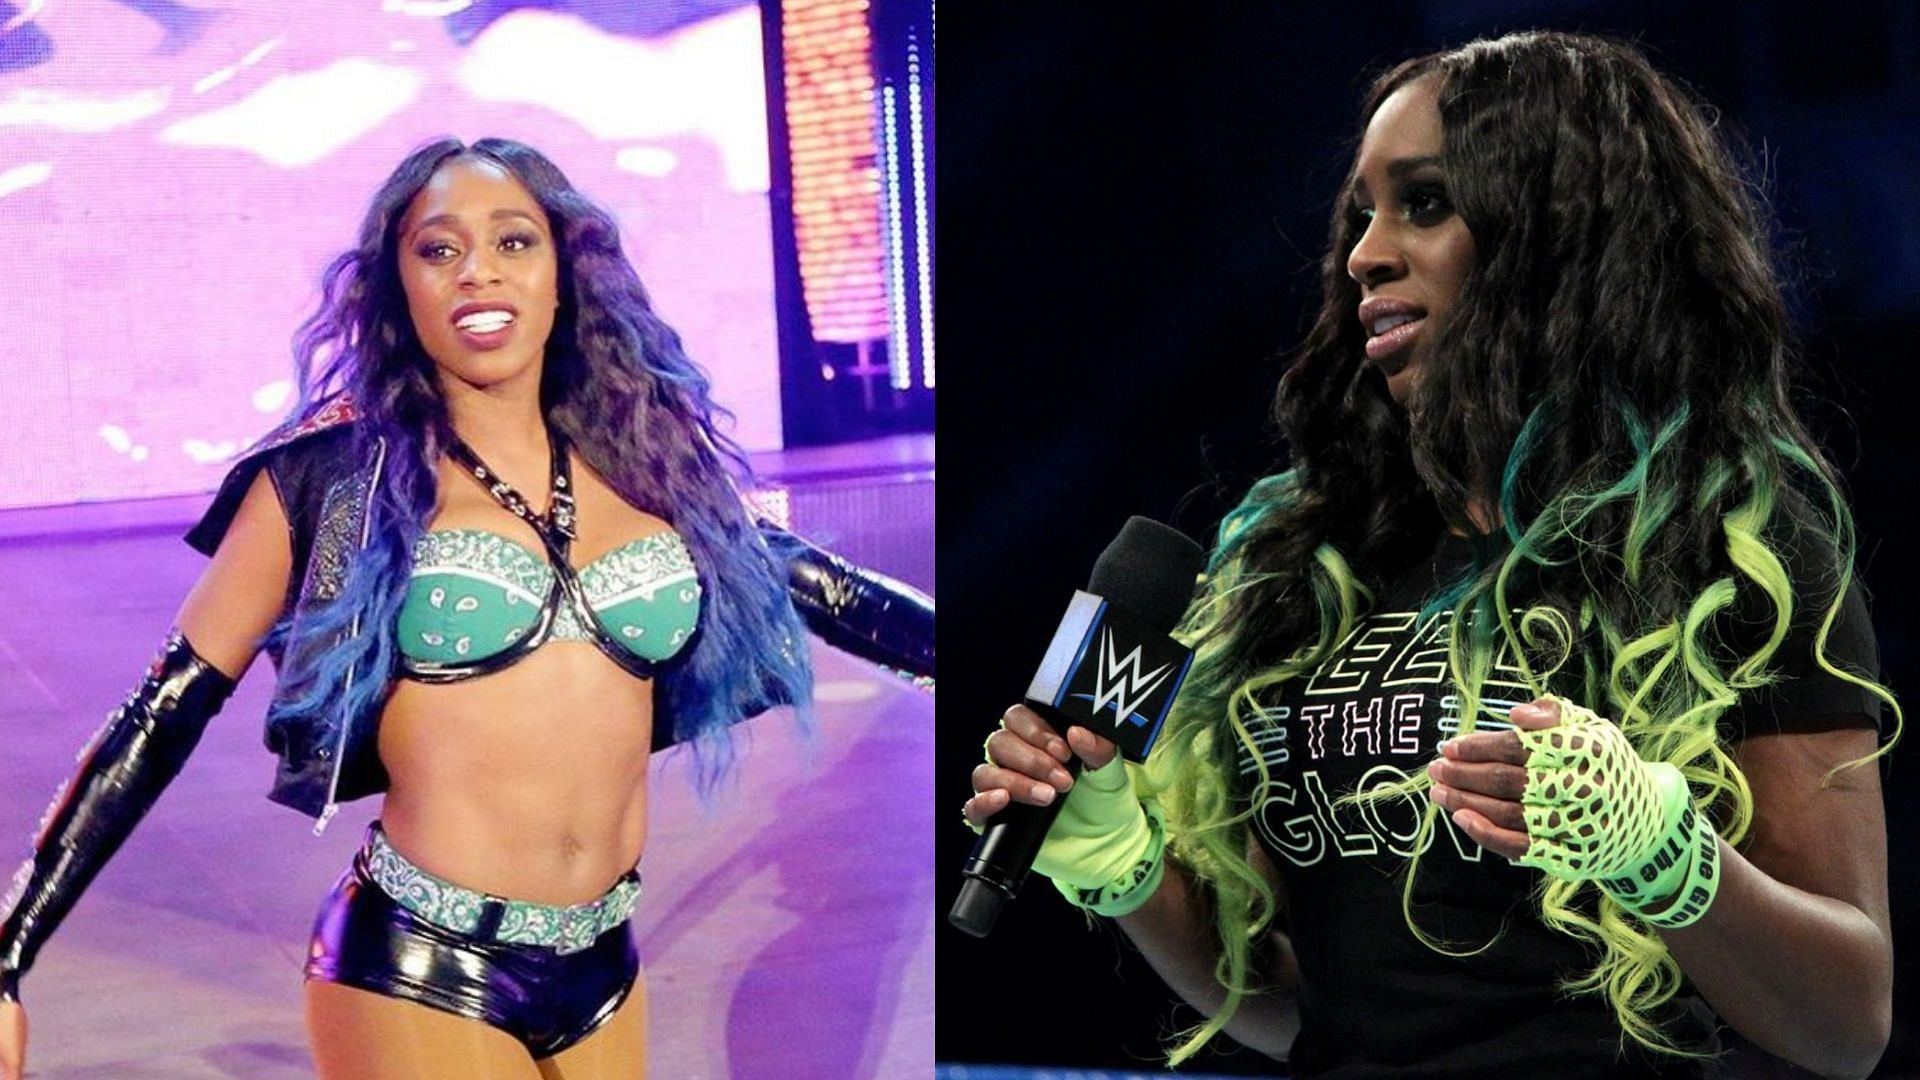 Naomi finally confirms her WWE status